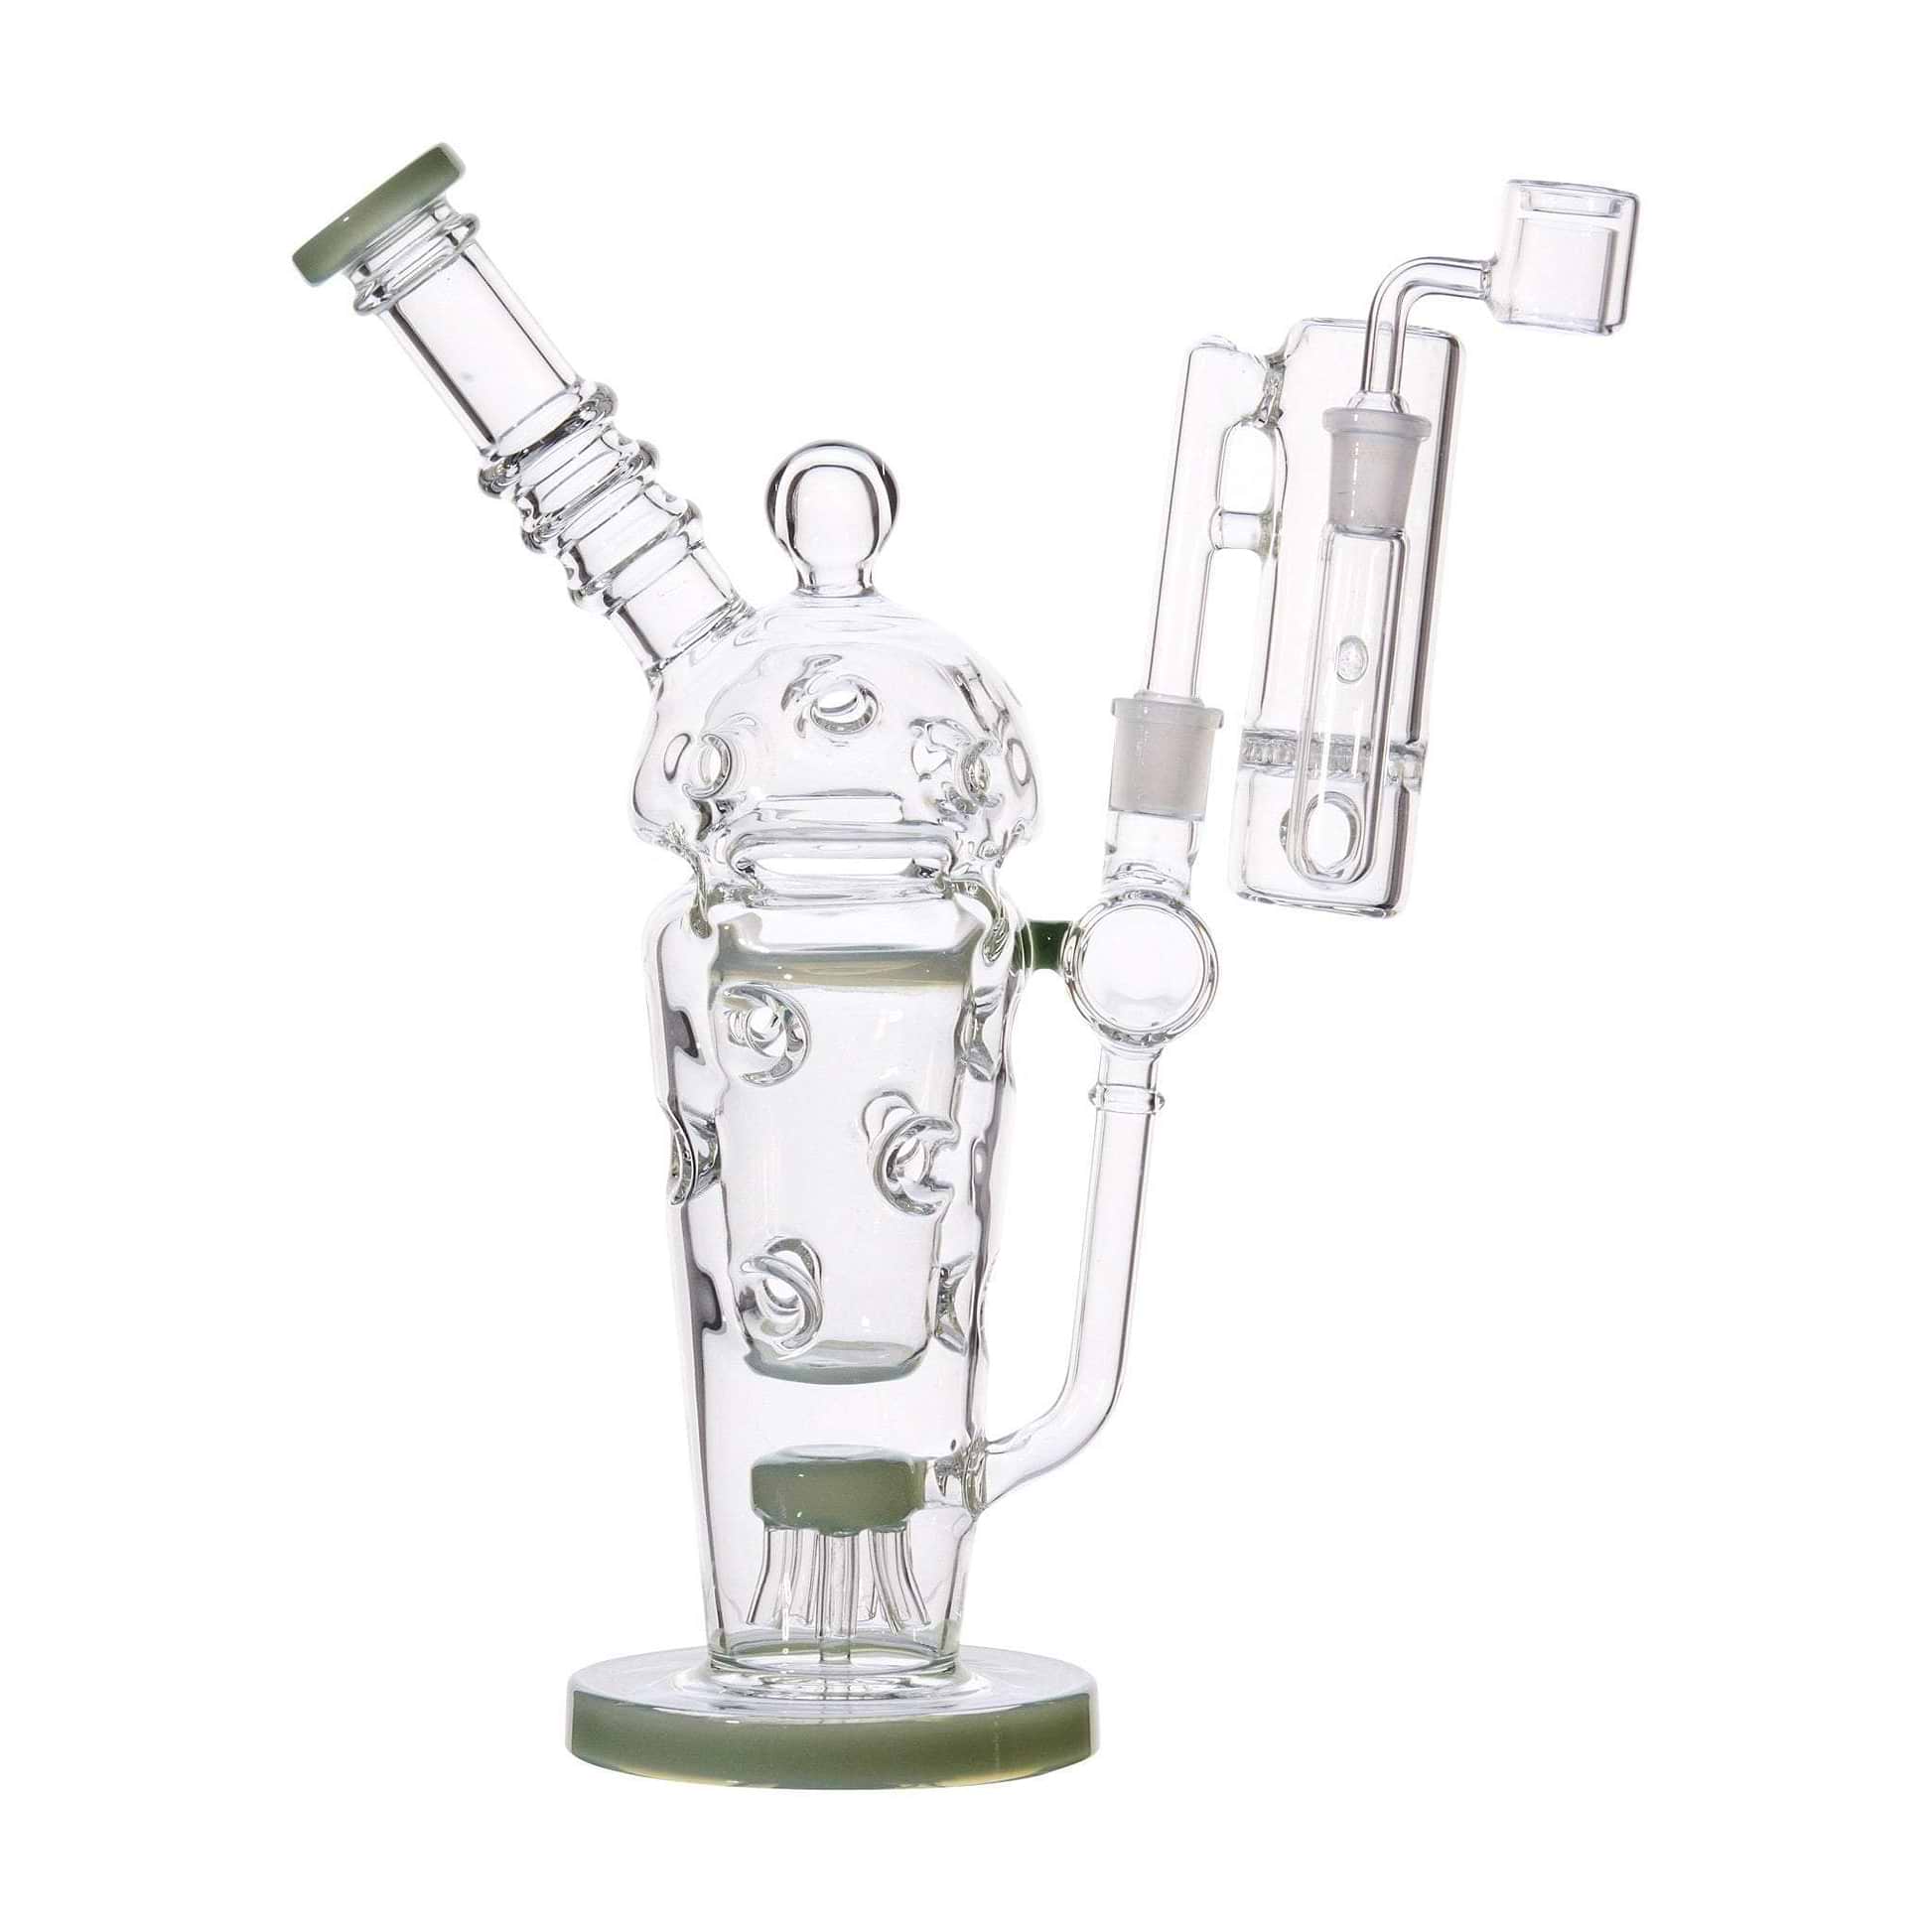 7-inch glass dab rig smoking device milkshake shape and look sturdy base